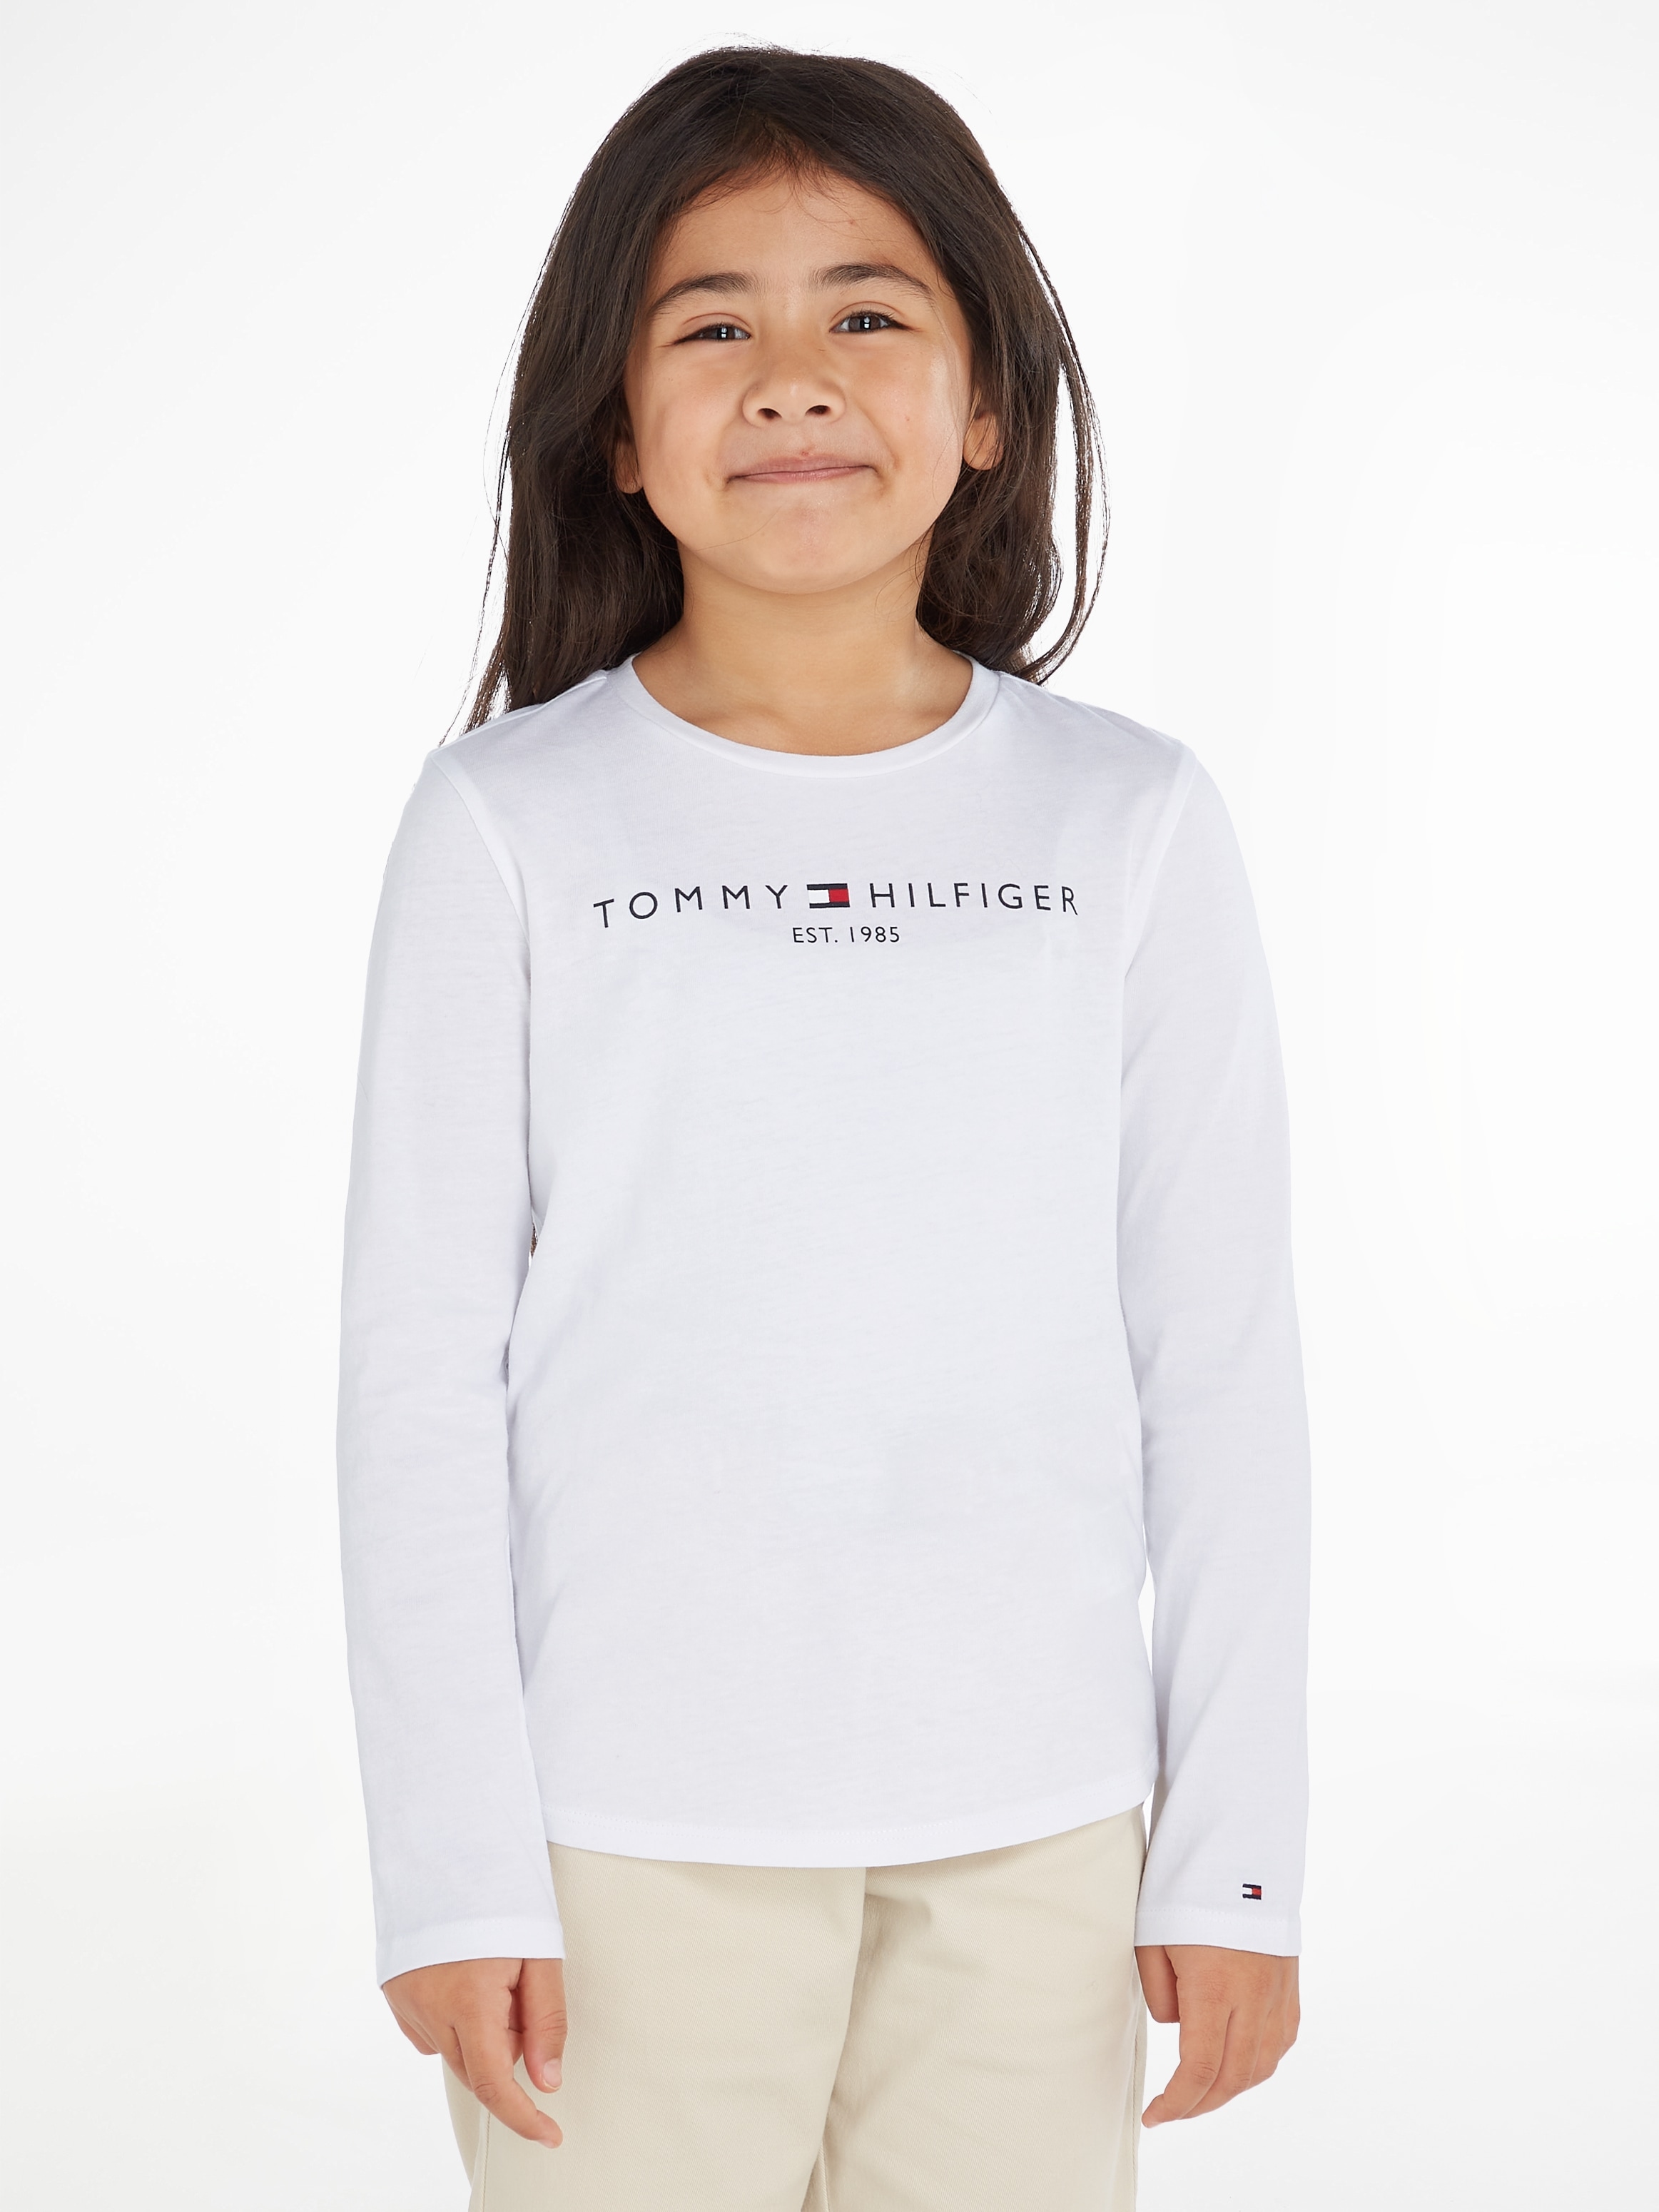 Tommy Hilfiger Langarmshirt »ESSENTIAL TEE L/S«, mit Tommy Hilfiger Logoschriftzug